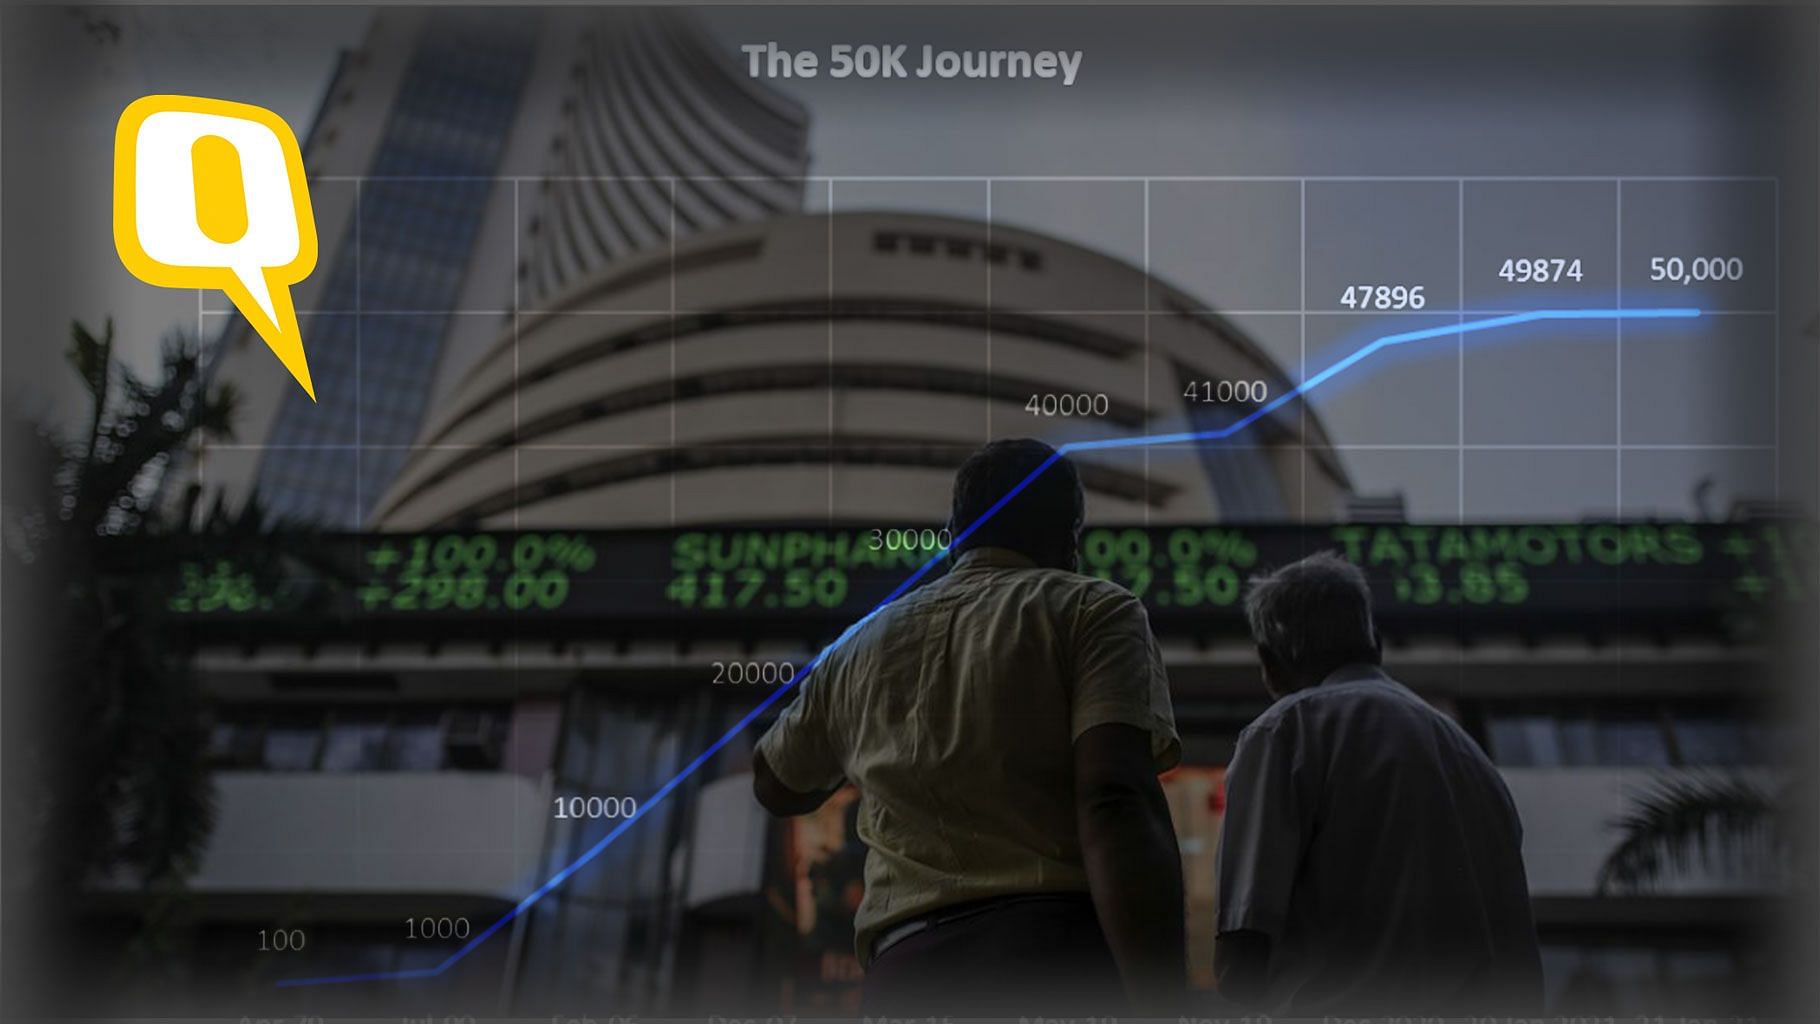 Sensex’s 50K journey.